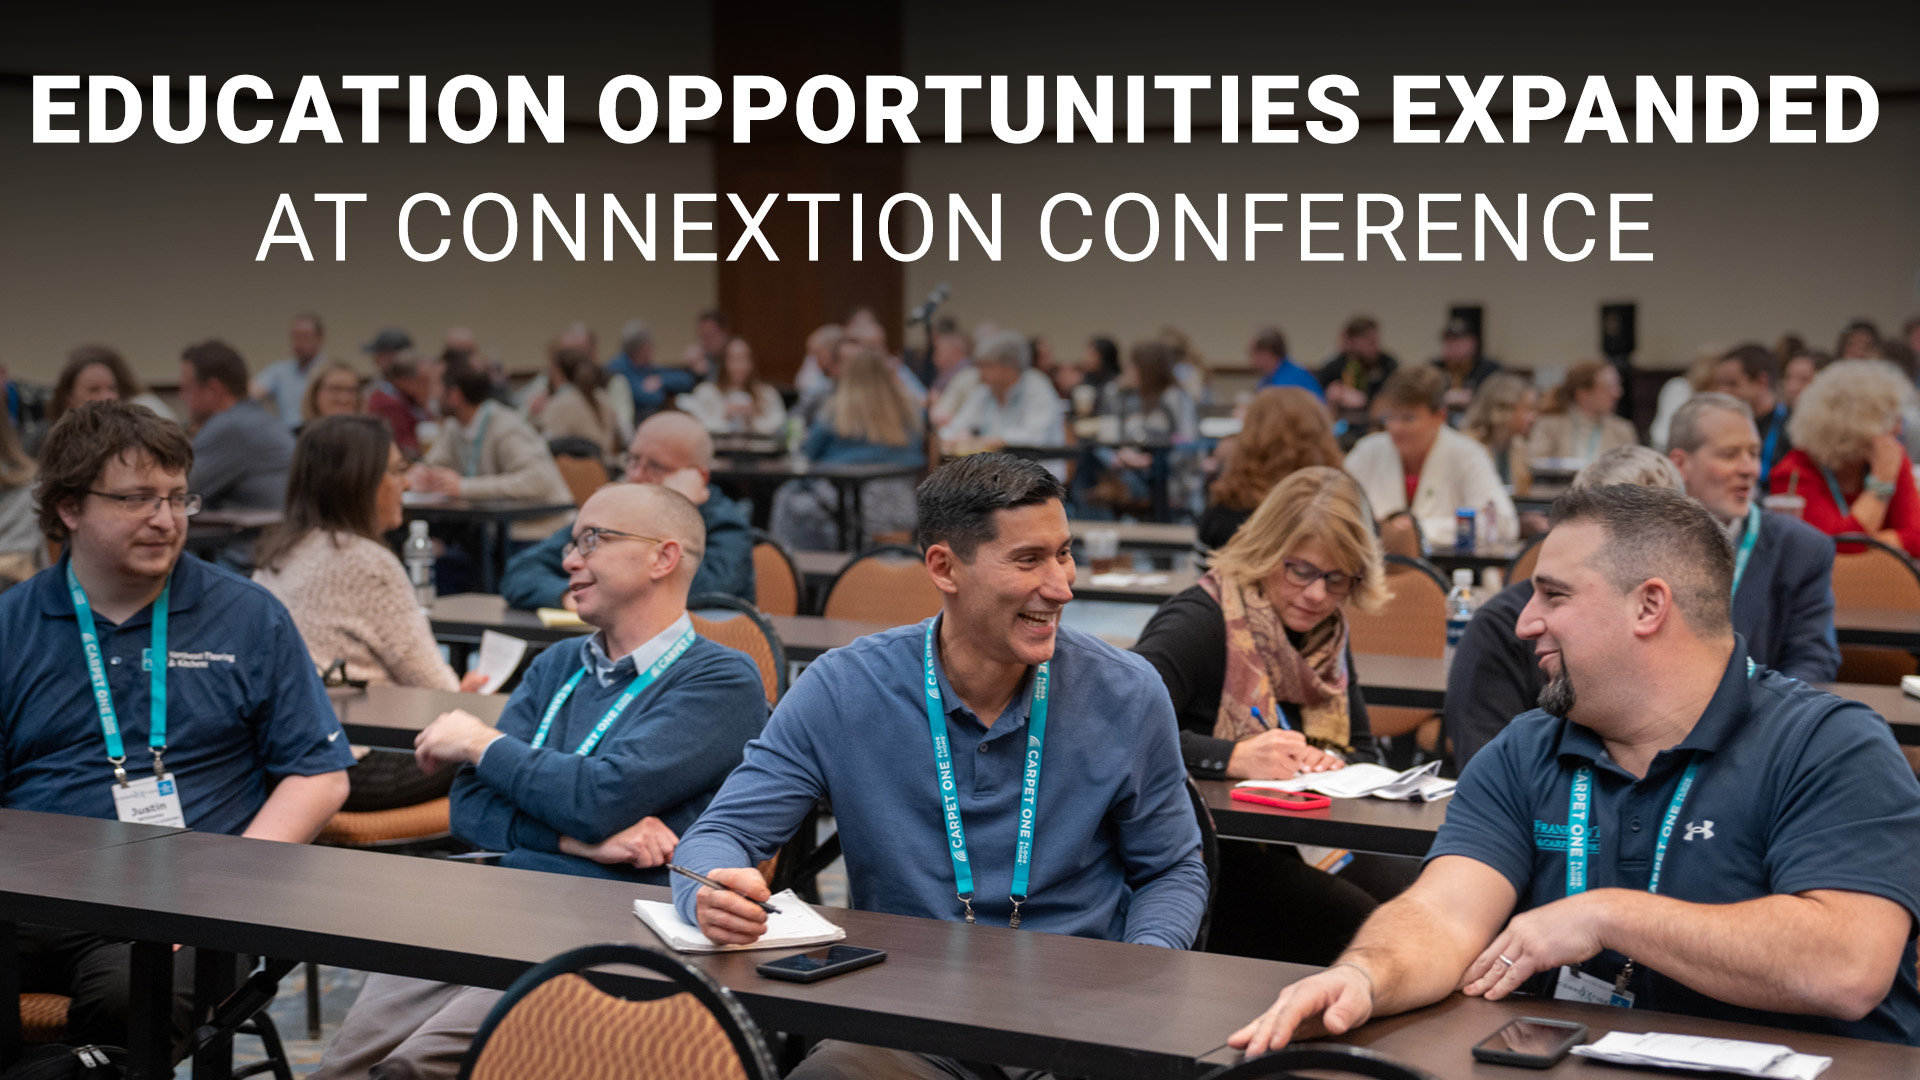 connextion conference expansion